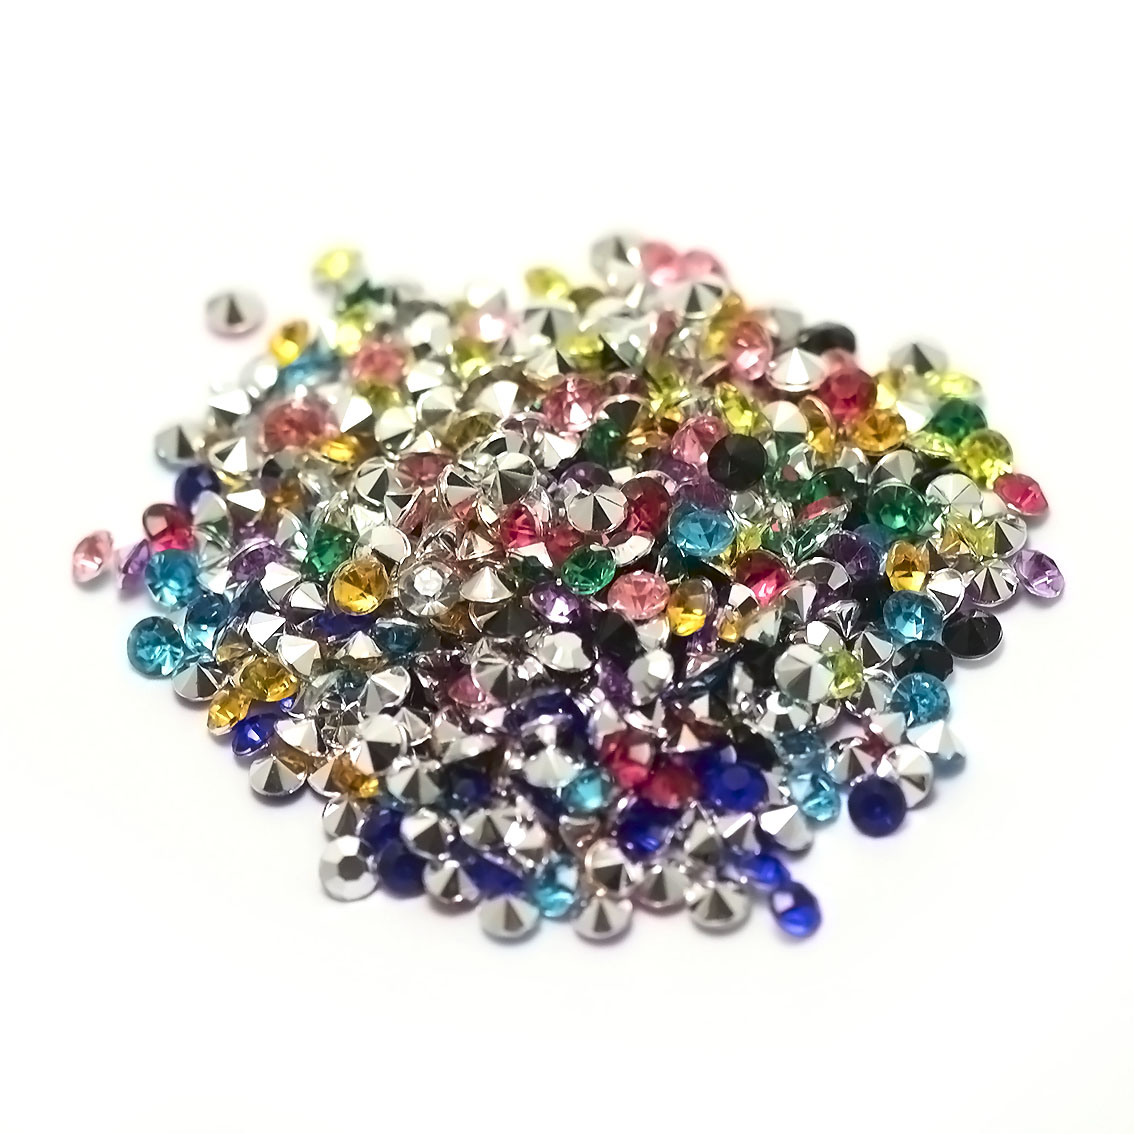 5g de perles strass en verre à coller cône 4 mm, assortiment de couleurs